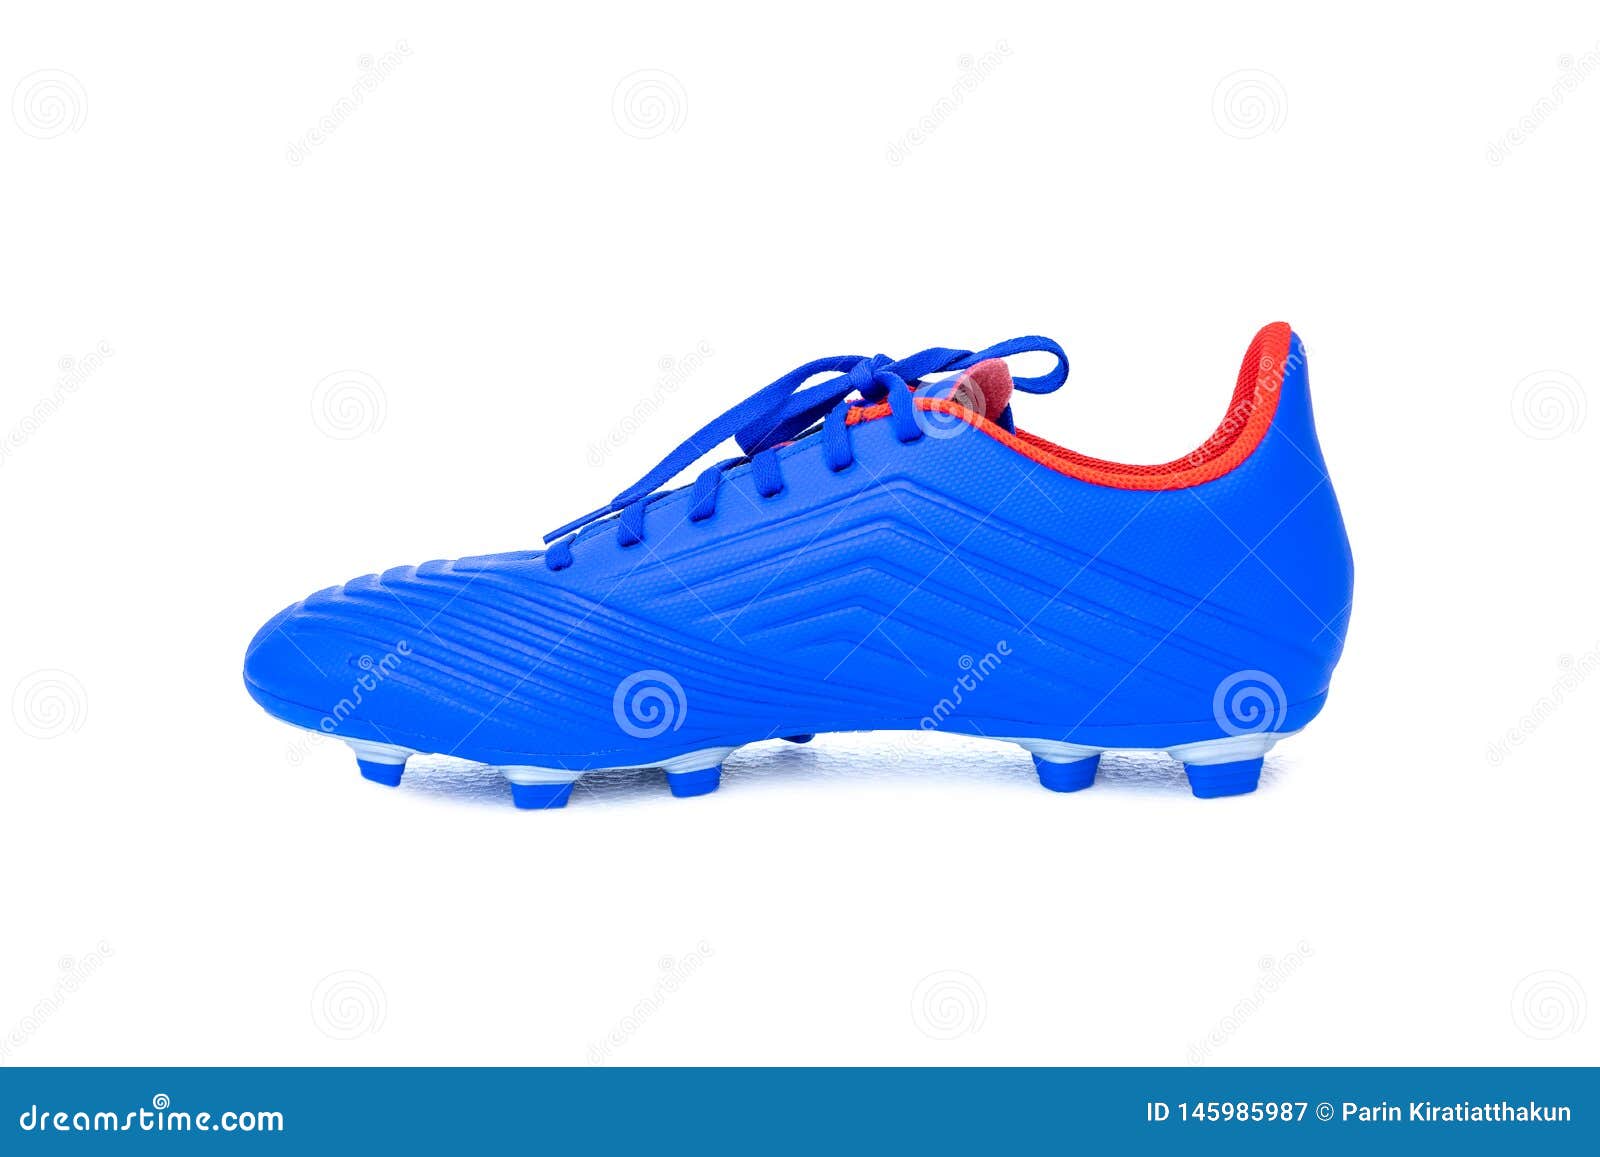 predator football boots 2019